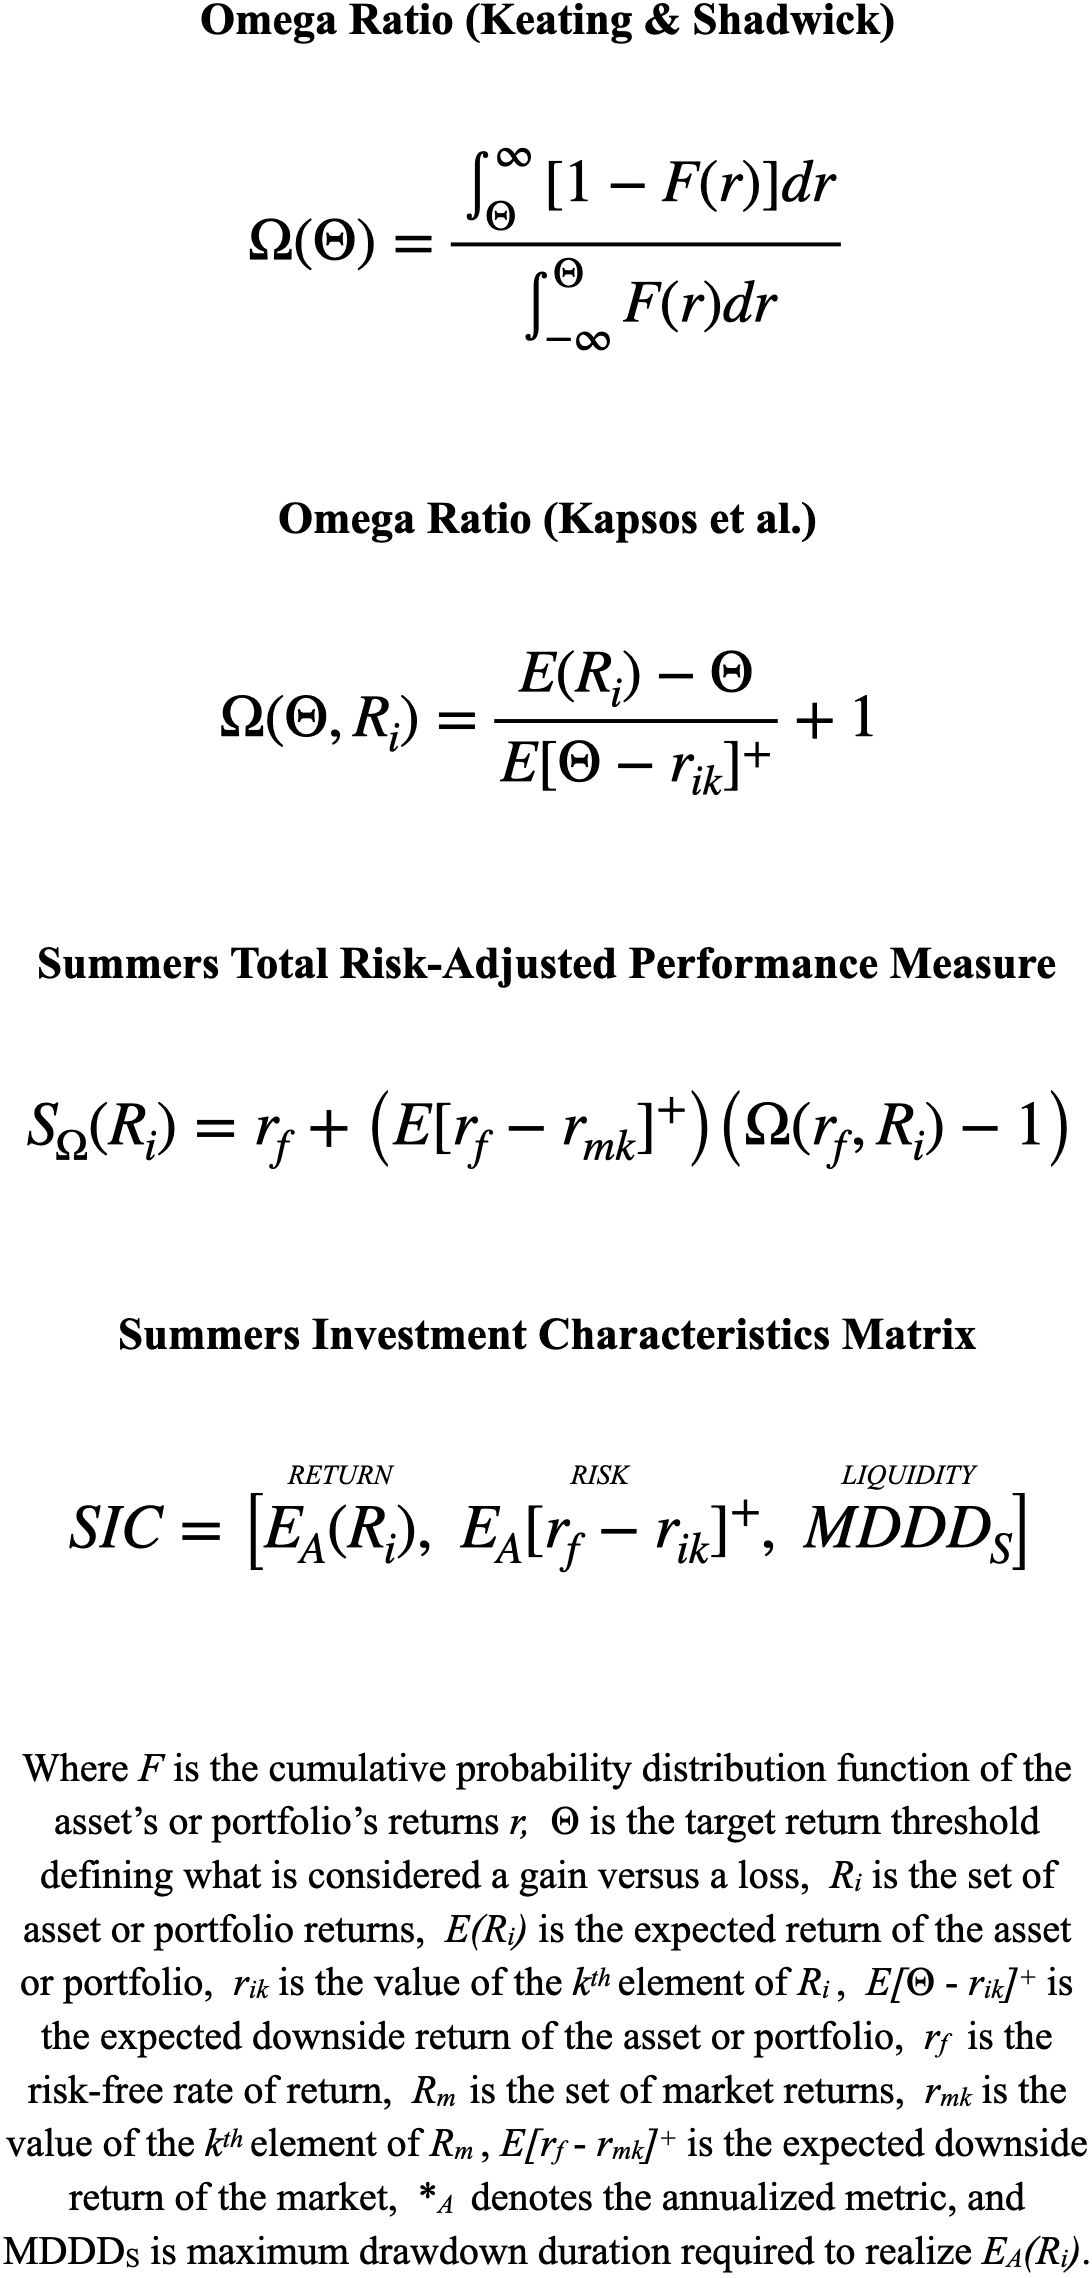 Summers Total Risk-Adjusted Performance Measure & Investment Characteristics Matrix